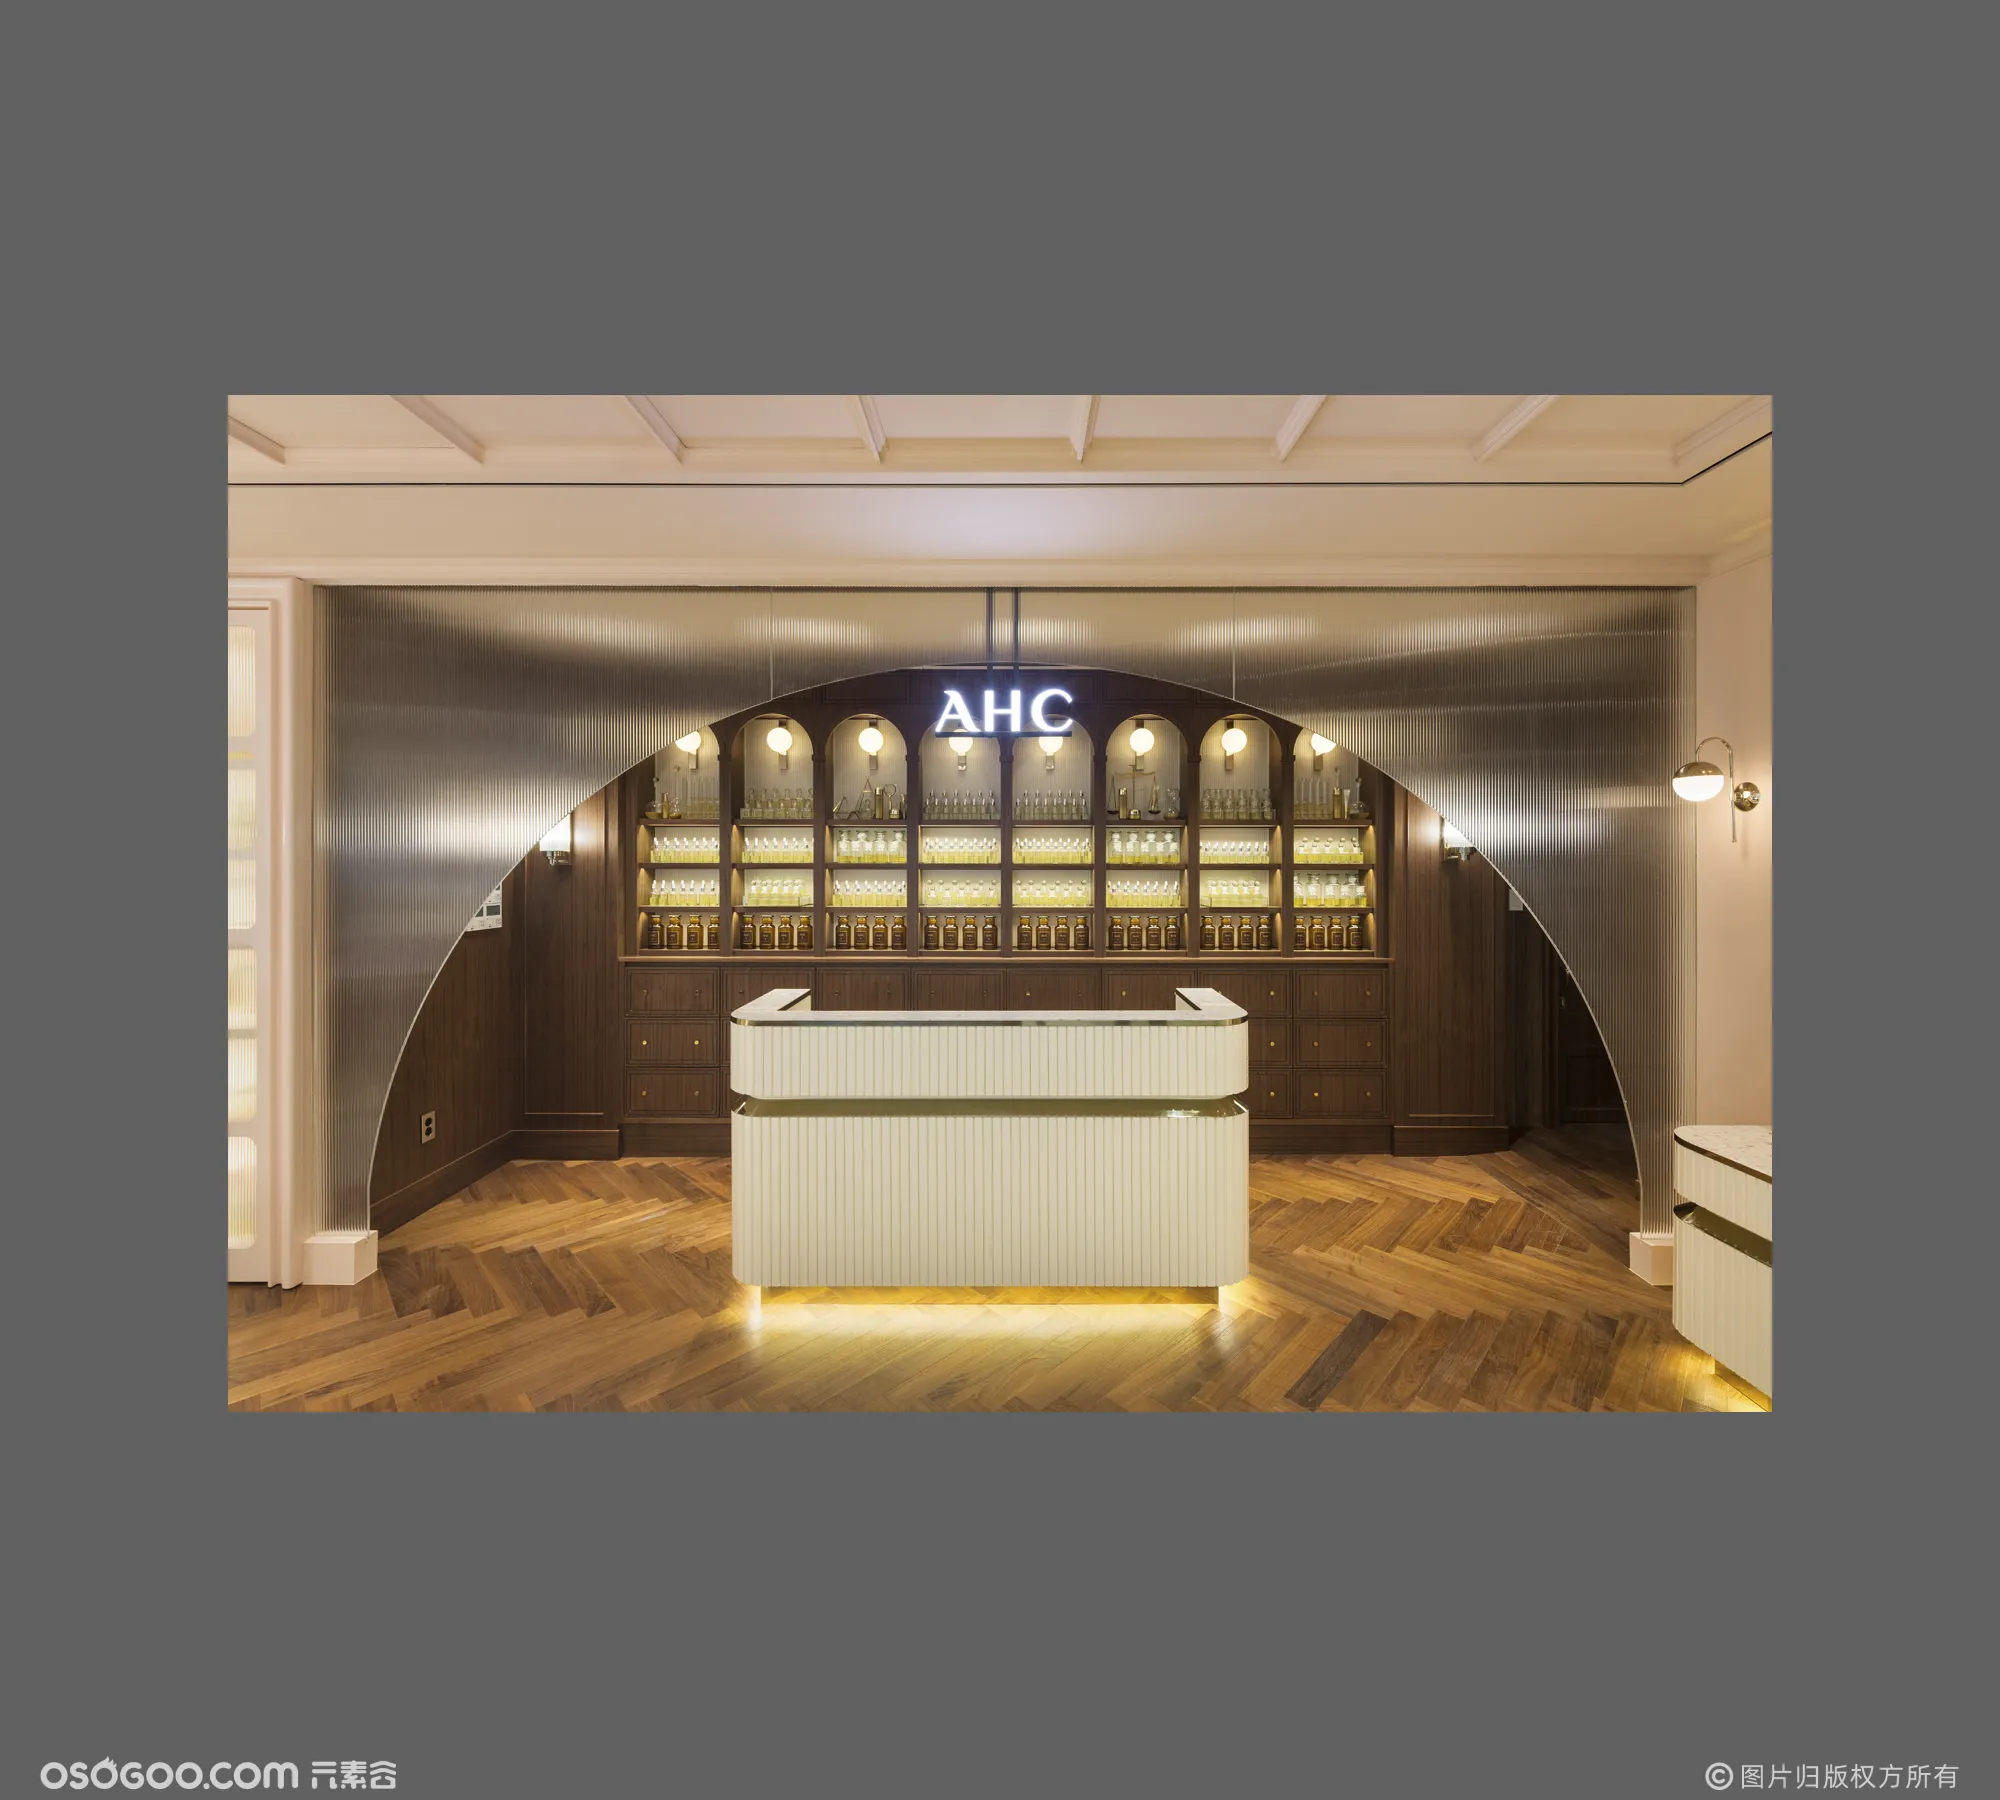 AHC旗舰店“未来沙龙”